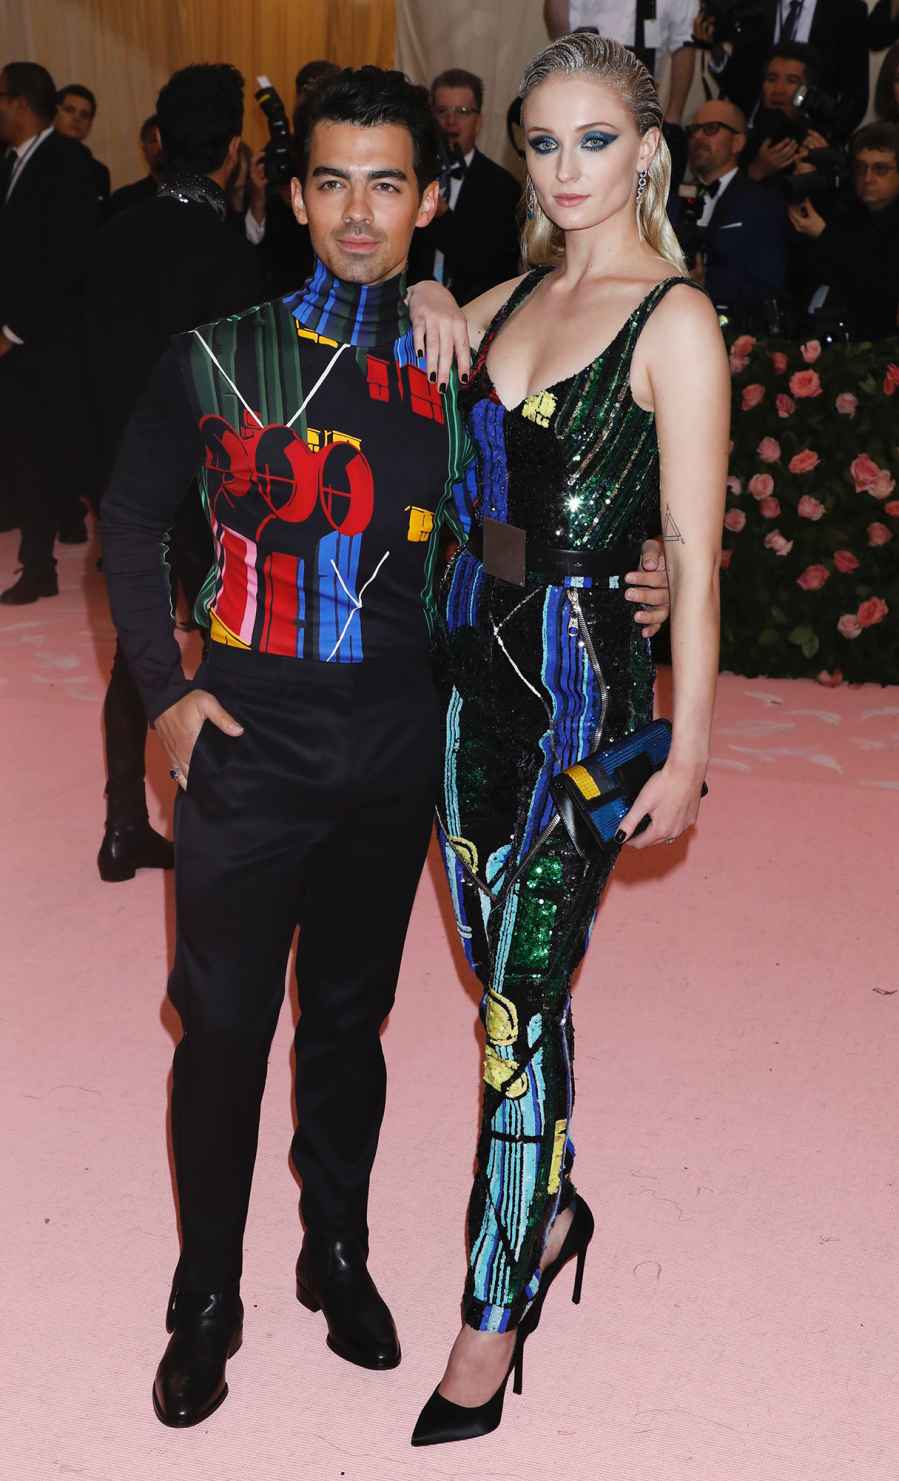 Sophie Turner and Joe Jonas’s style as a couple